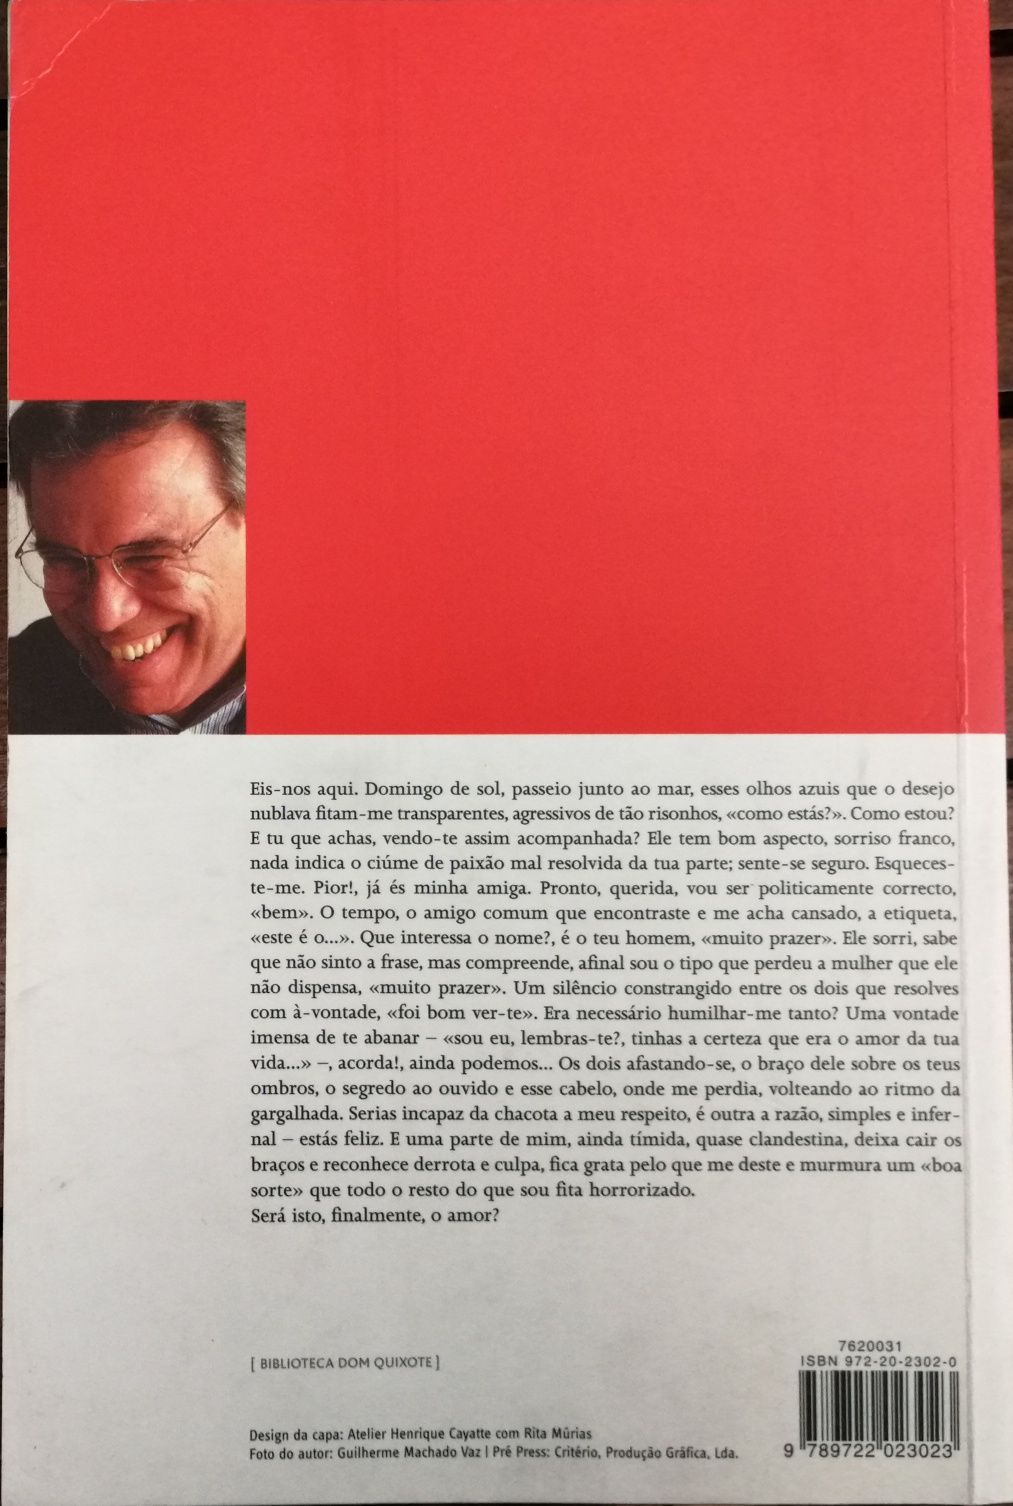 Livro "Estes Dificeis Amores", Júlio Machado Vaz